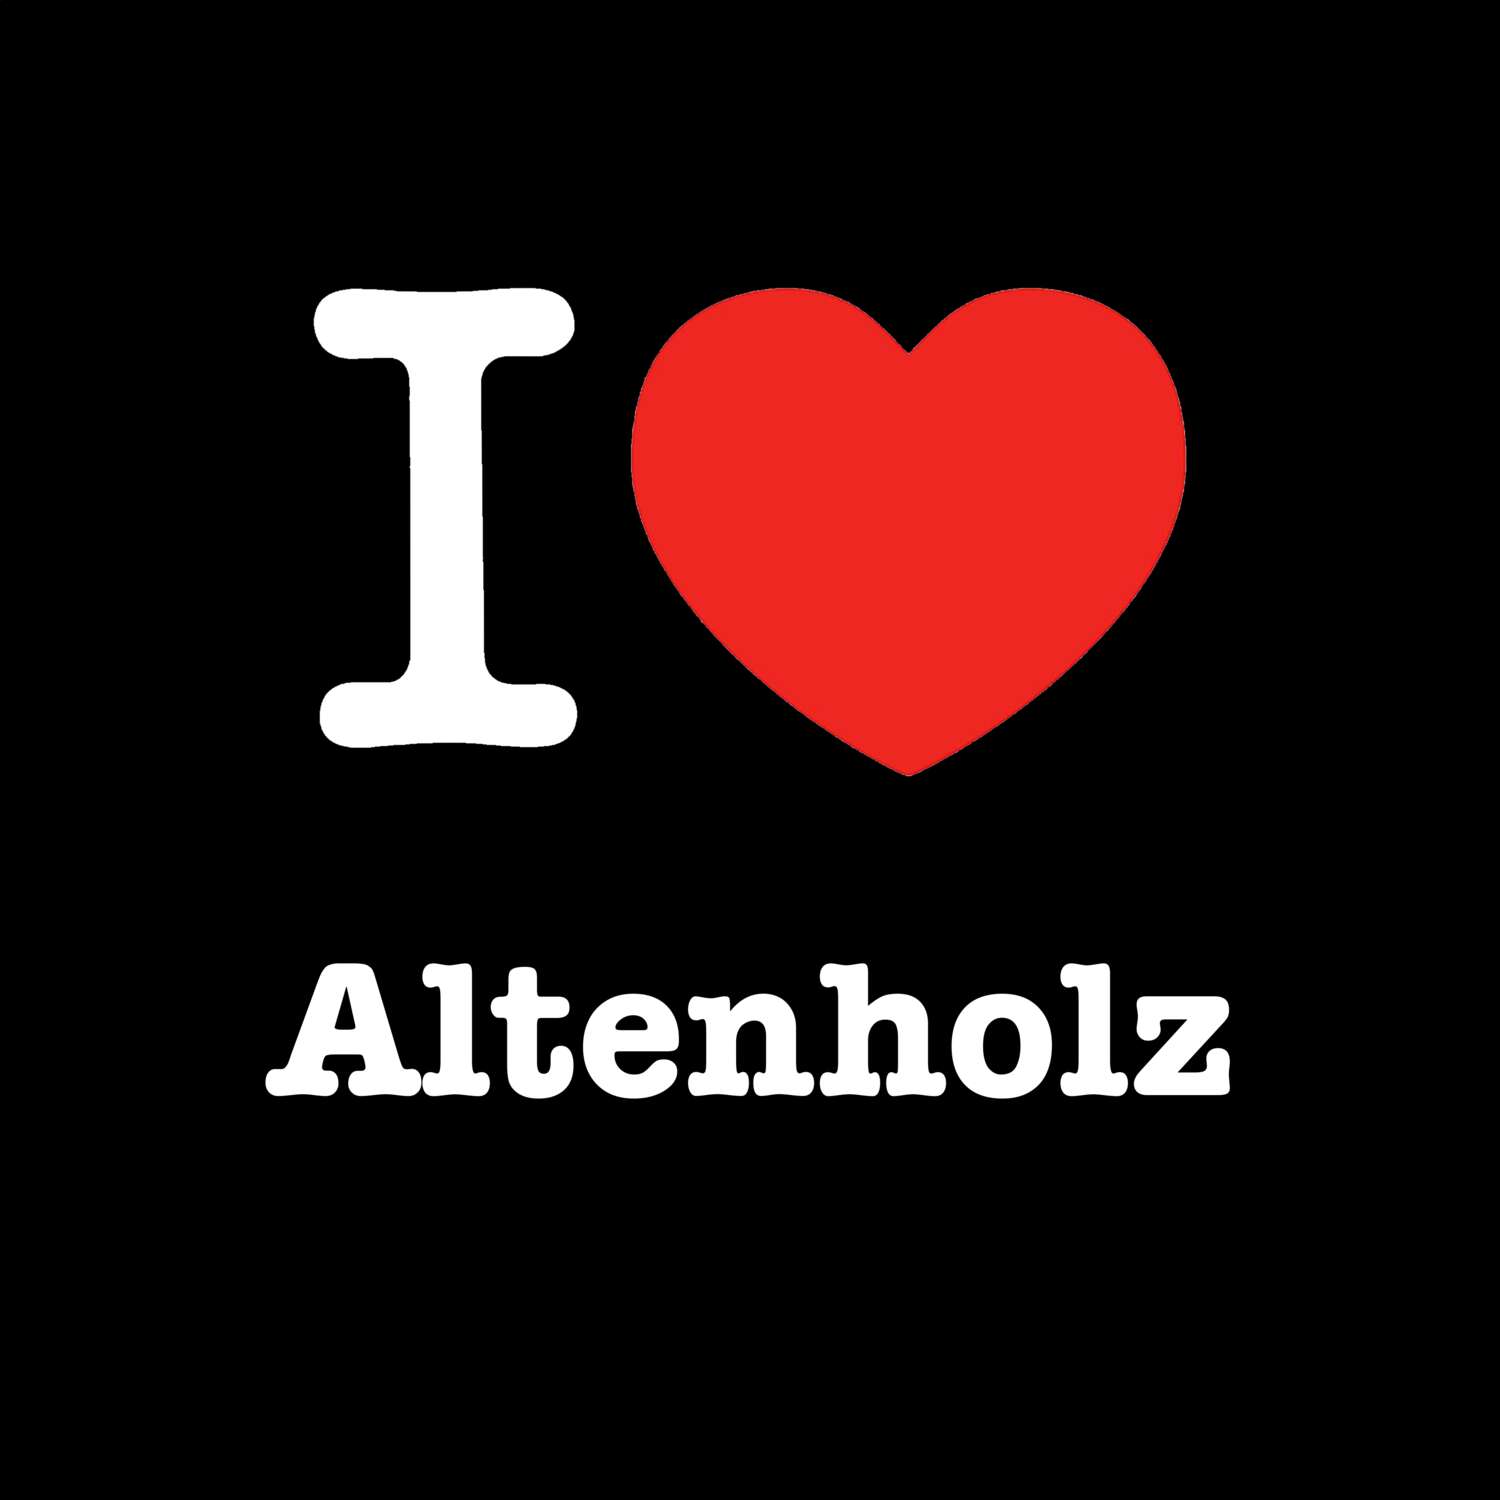 Altenholz T-Shirt »I love«